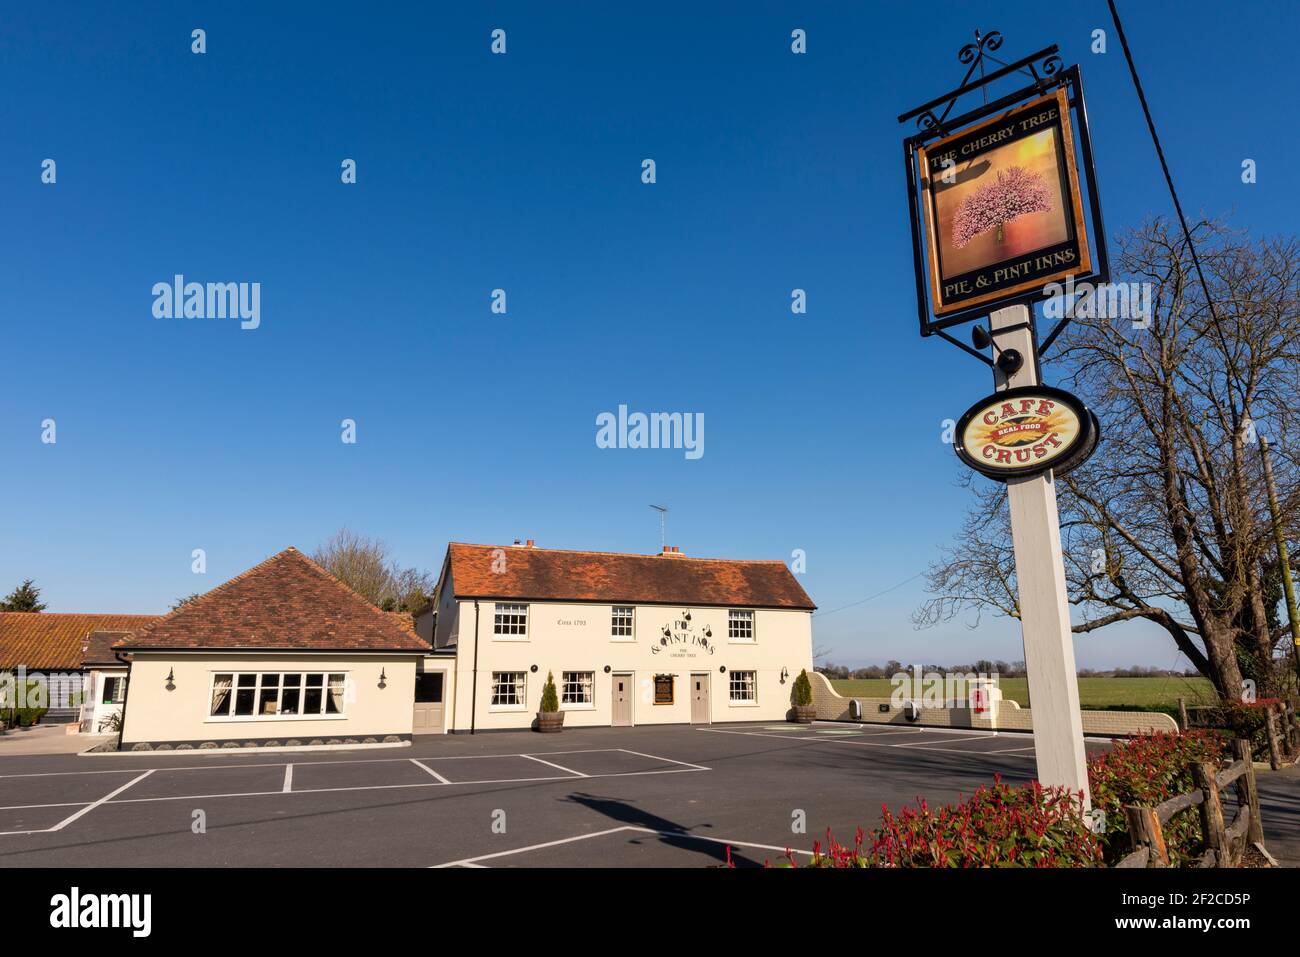 The Cherry Tree, Pie & Pint Inns, pub restaurant on Stambridge Road, Stambridge, Rochford, Essex, UK. Countryside location. Country pub Stock Photo